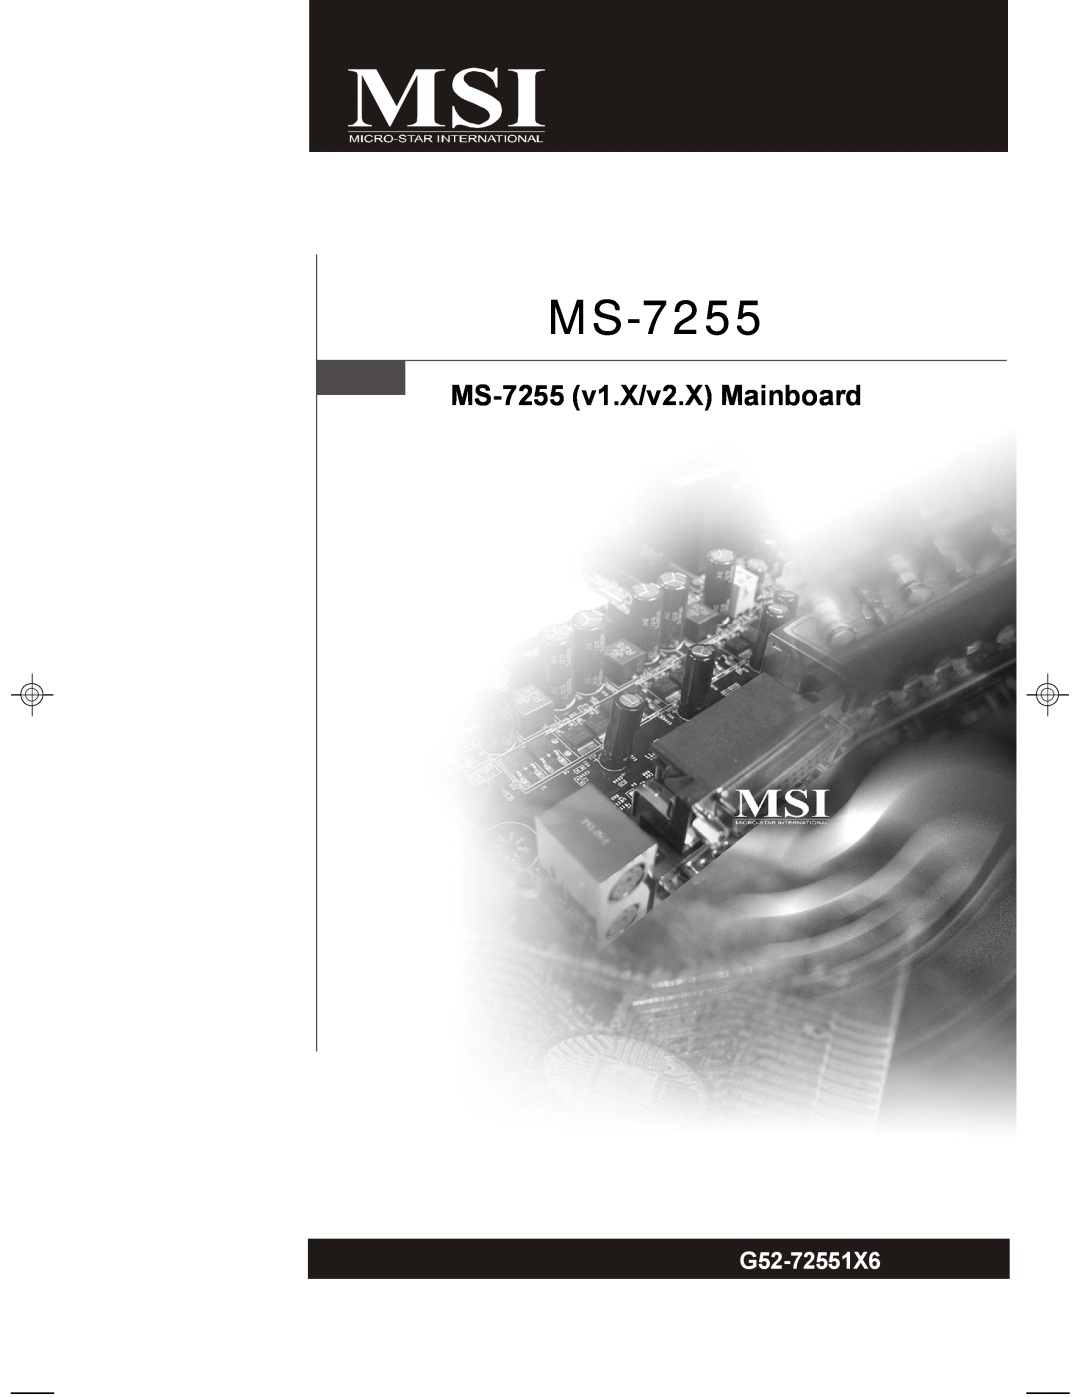 MSI manual MS-7255 v1.X/v2.X Mainboard, G52-72551X6 